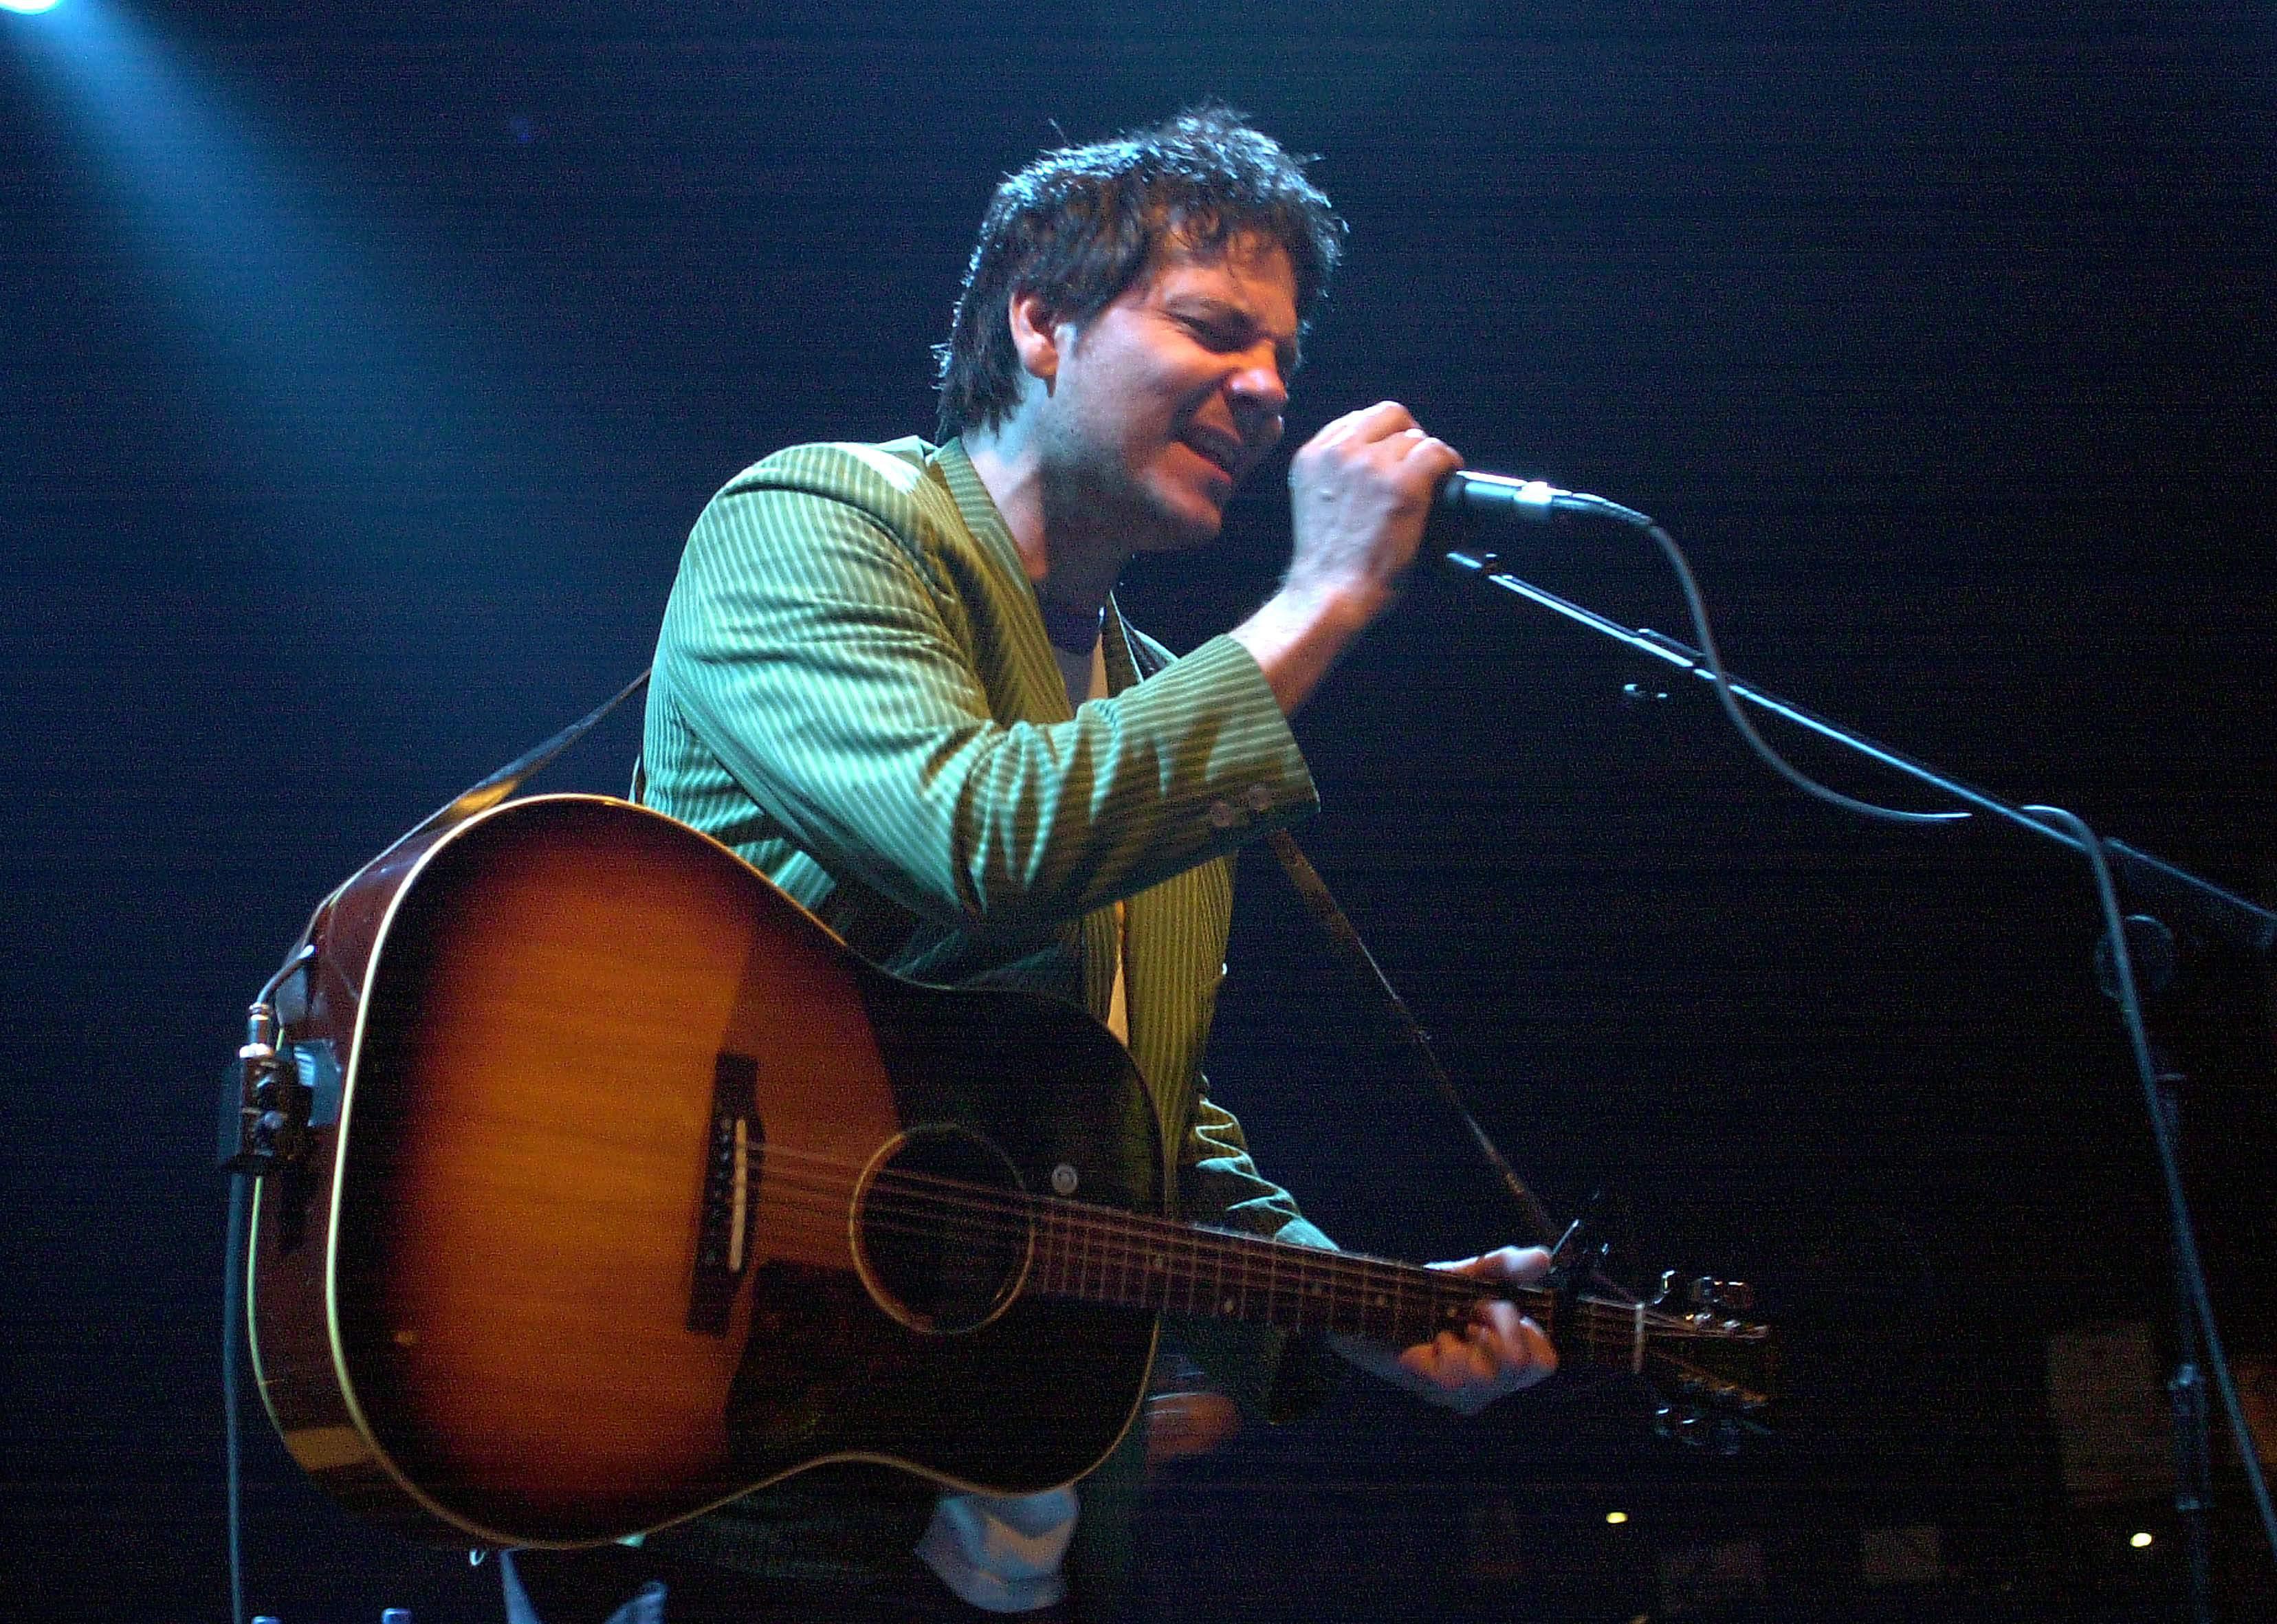 Wilco lead singer Jeff Tweedy sings at a concert